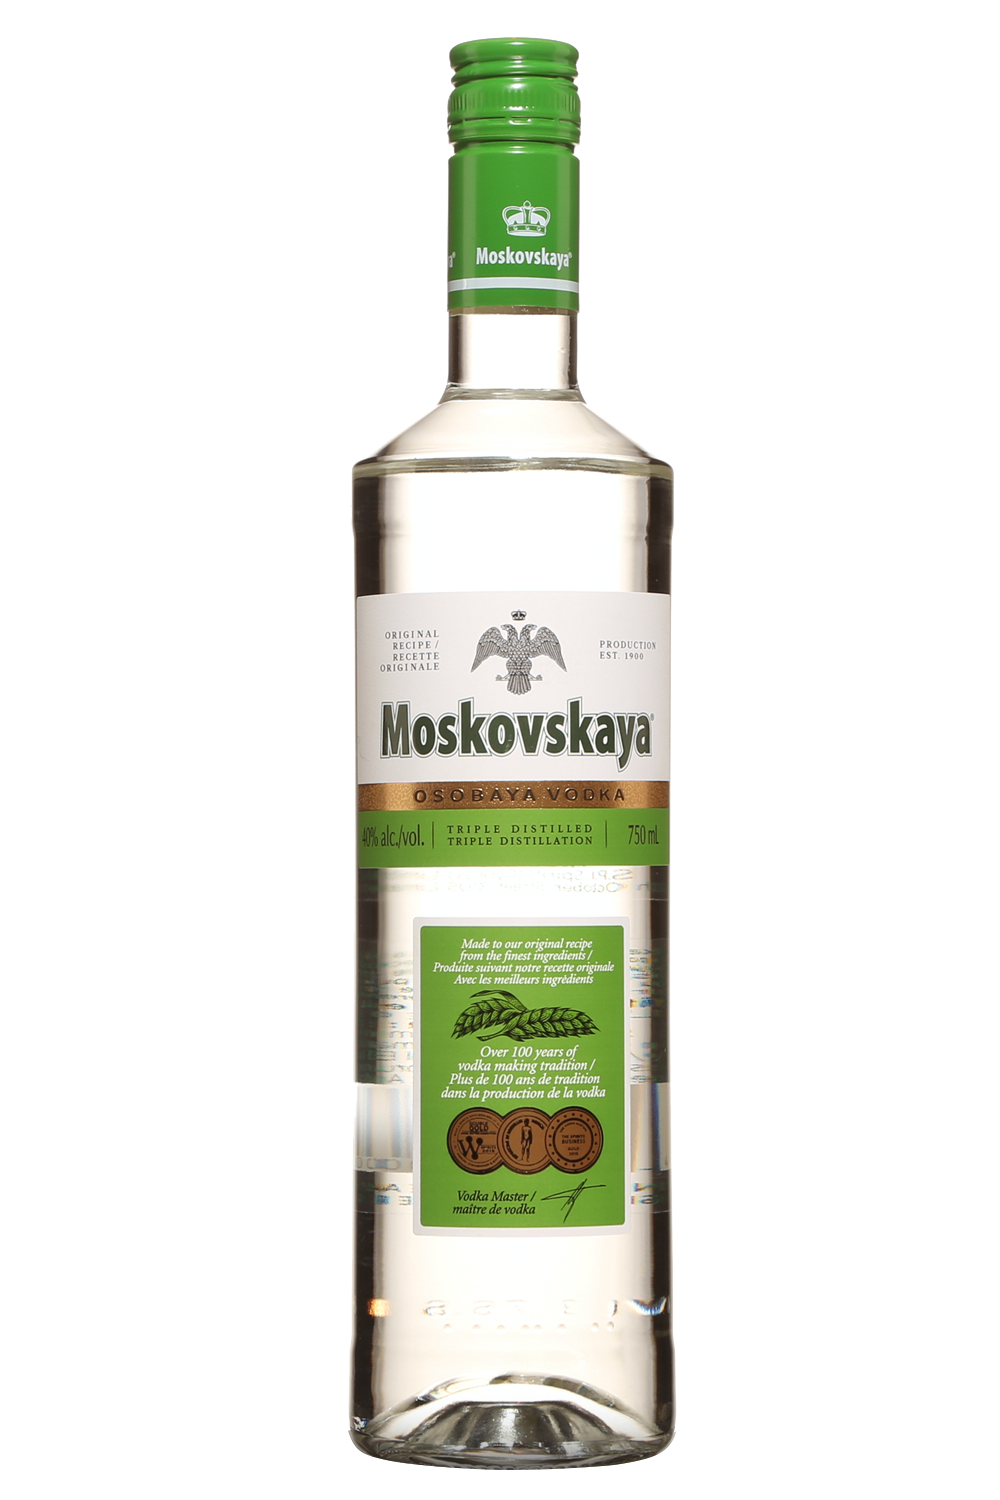 Moskovskaya vodka 0.70 cl